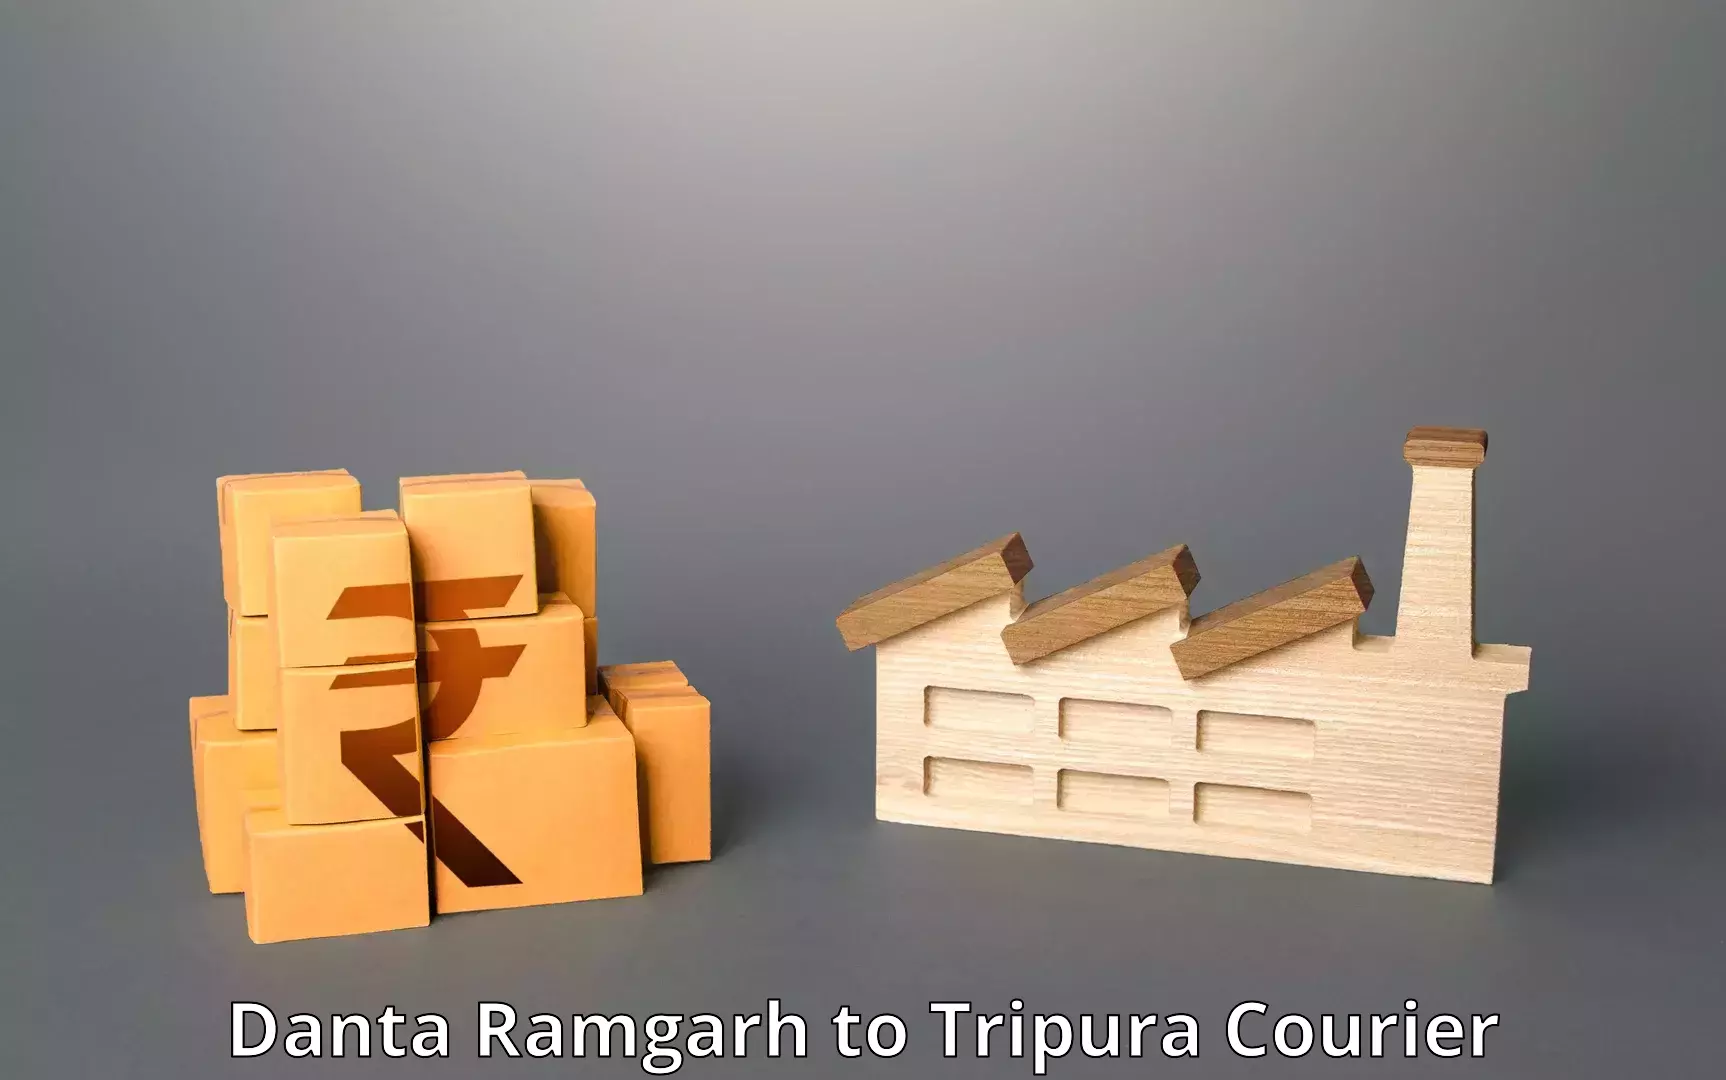 Global shipping networks Danta Ramgarh to Udaipur Tripura